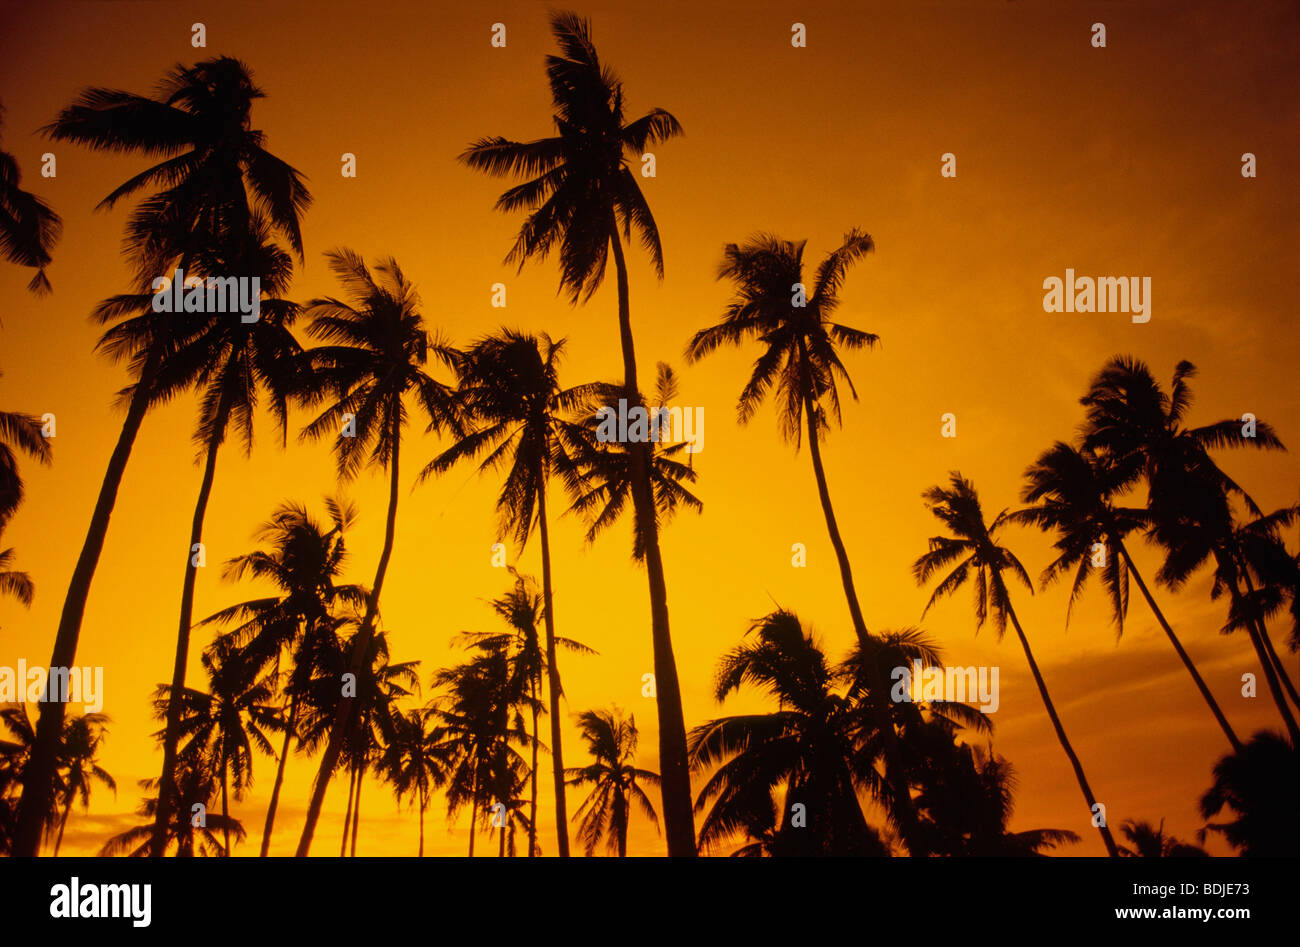 Kokosnuss-Palmen, Sonnenuntergang Silhouette Stockfoto